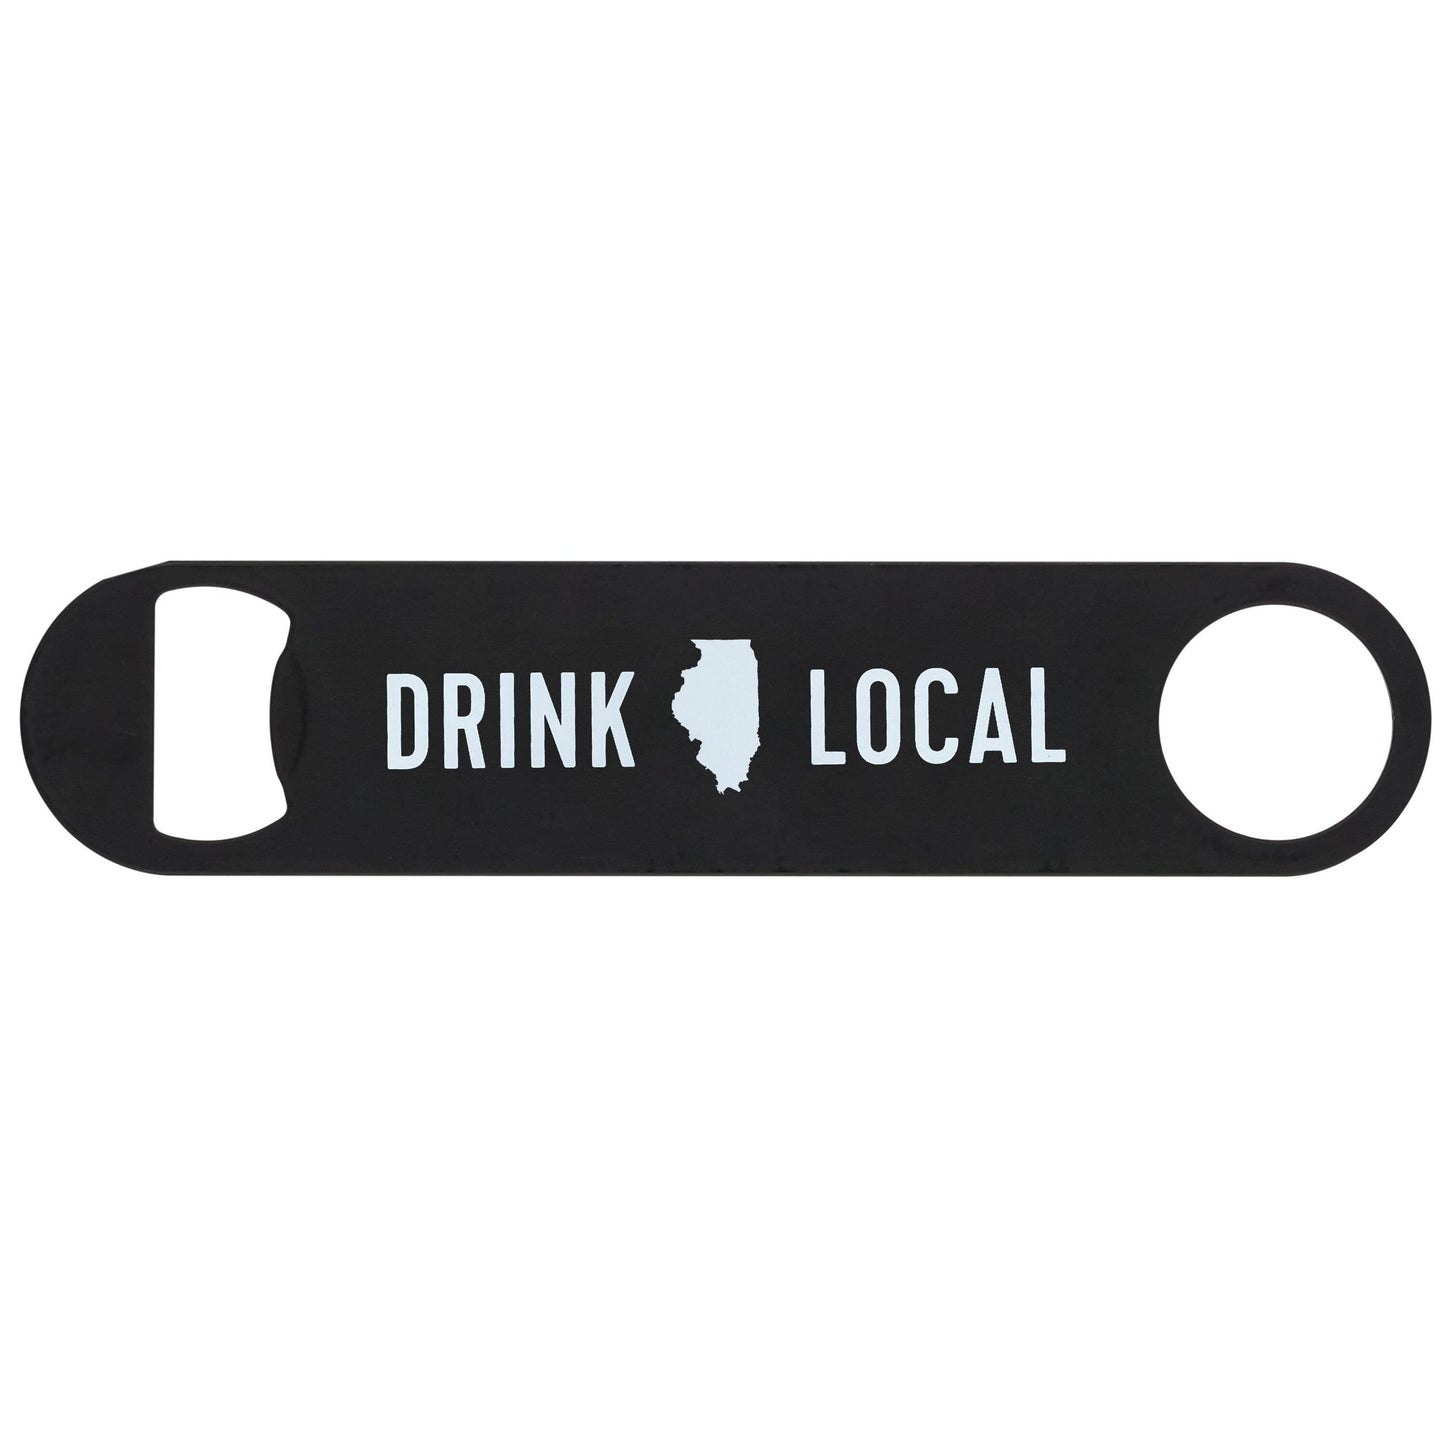 Stock image of black, metal, magnetic bottle opener, reading “Drink Local”.